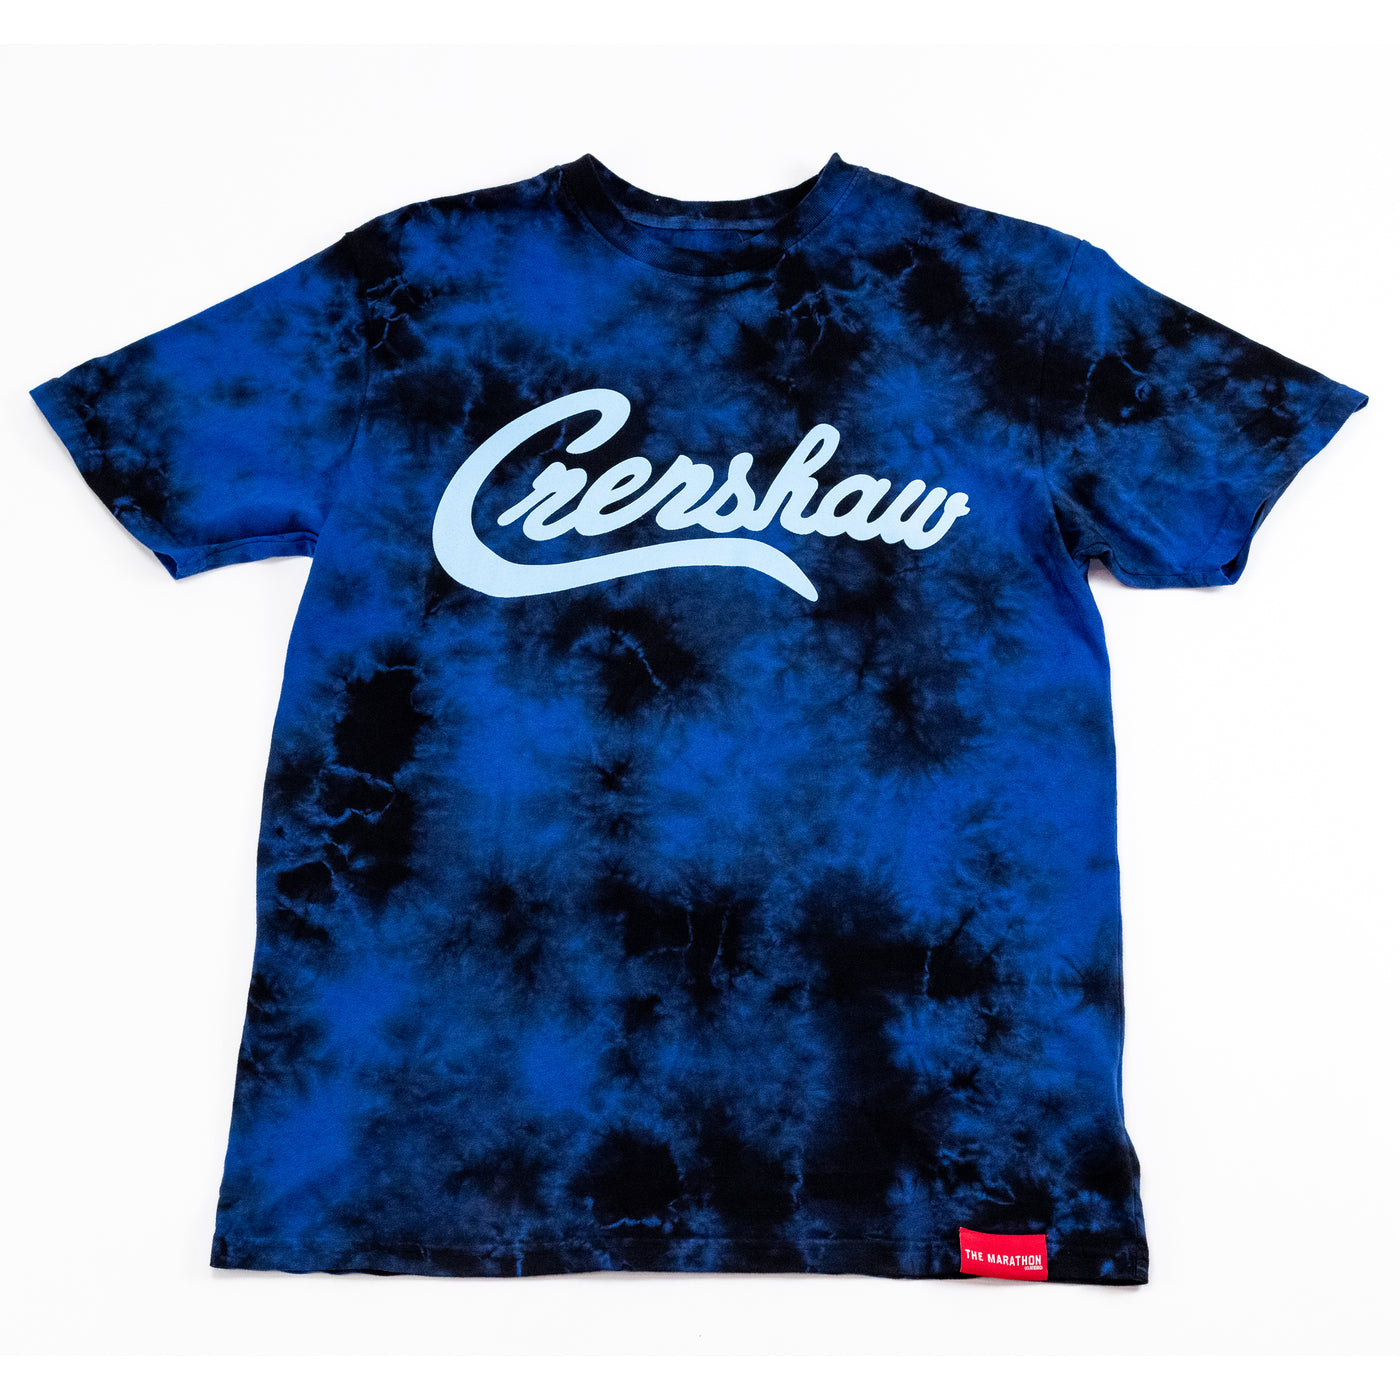 Crenshaw Limited Edition T-shirt - Navy/Indigo Tie Dye